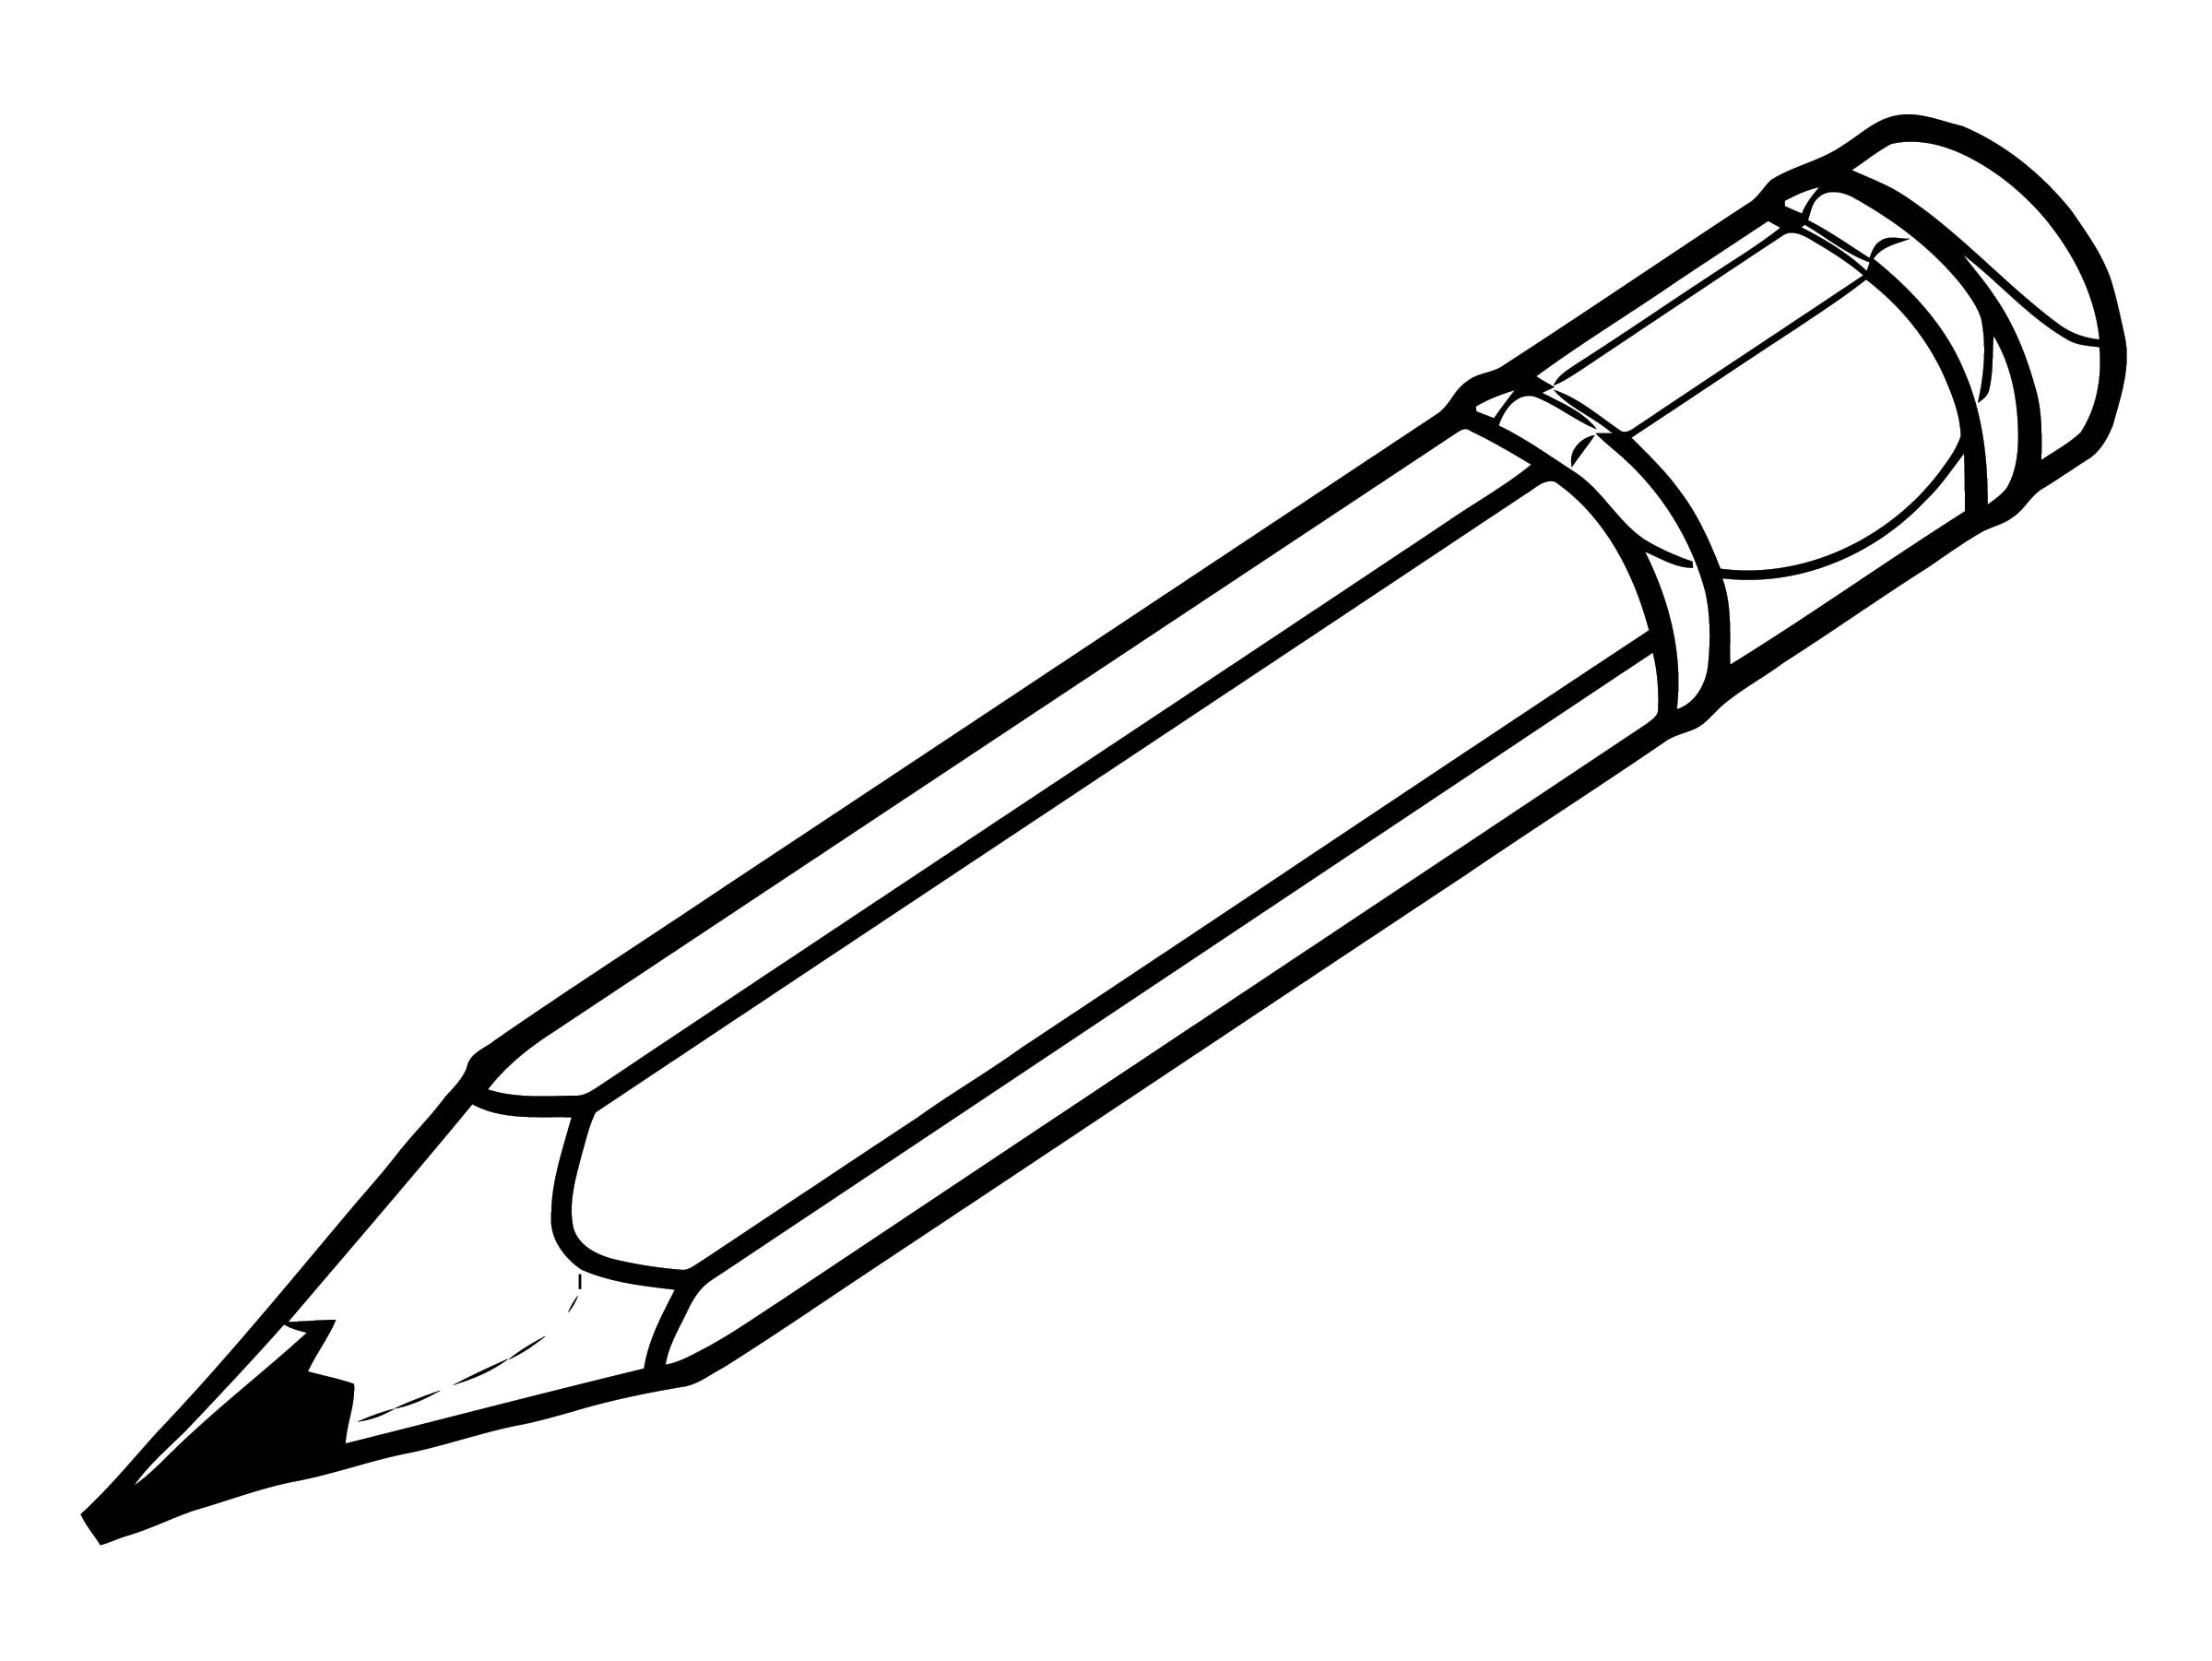 Pen pencil. Ручка раскраска. Ручка раскраска для детей. Раскраска ручки и карандаши. Раскраска с карандашами.